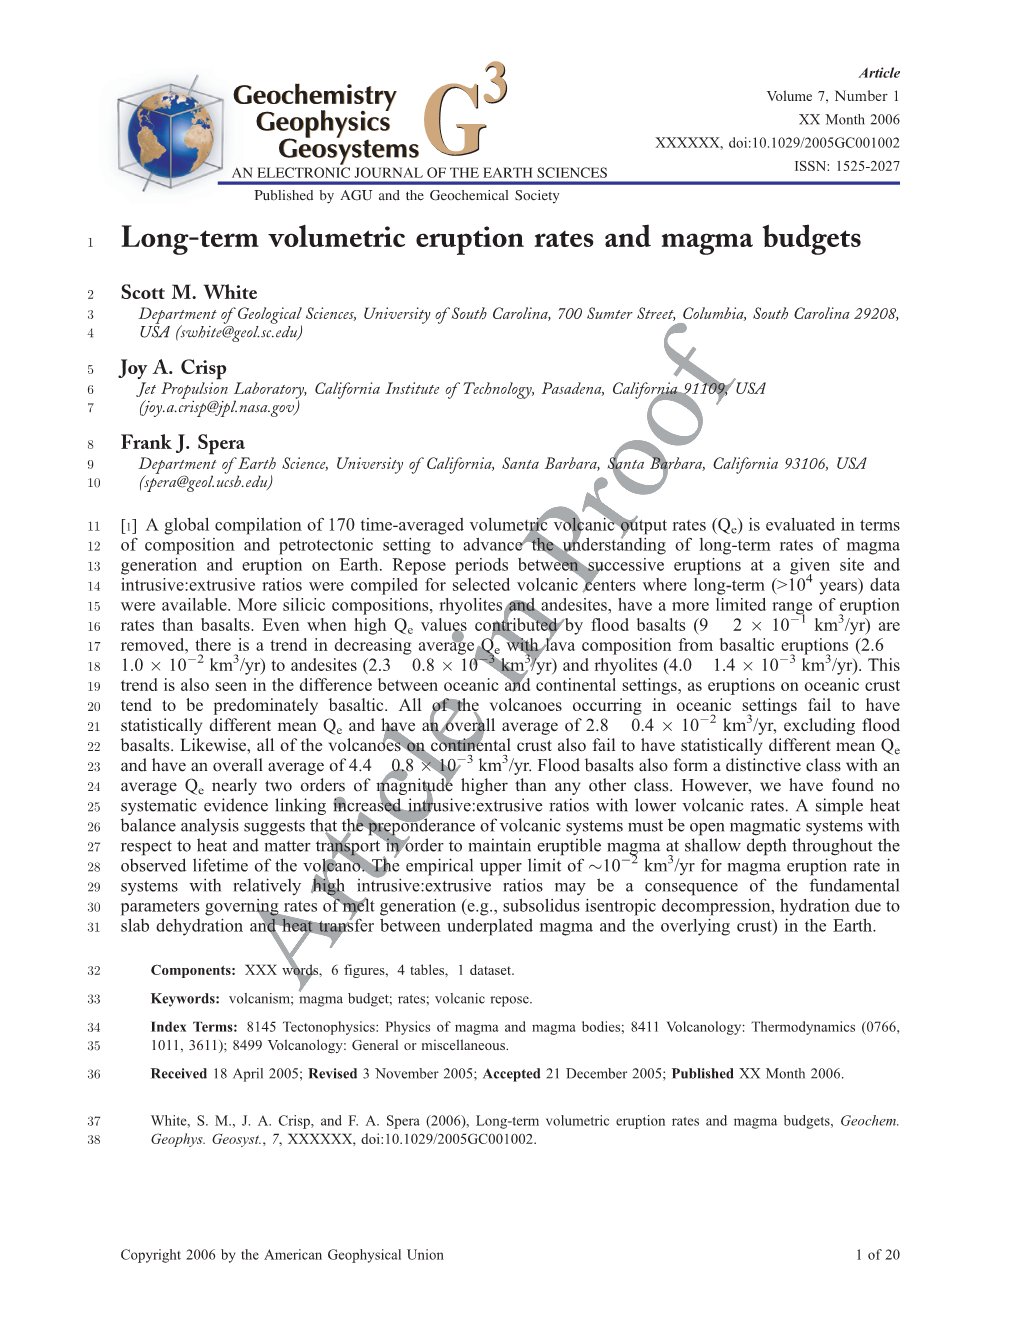 Long-Term Volumetric Eruption Rates and Magma Budgets